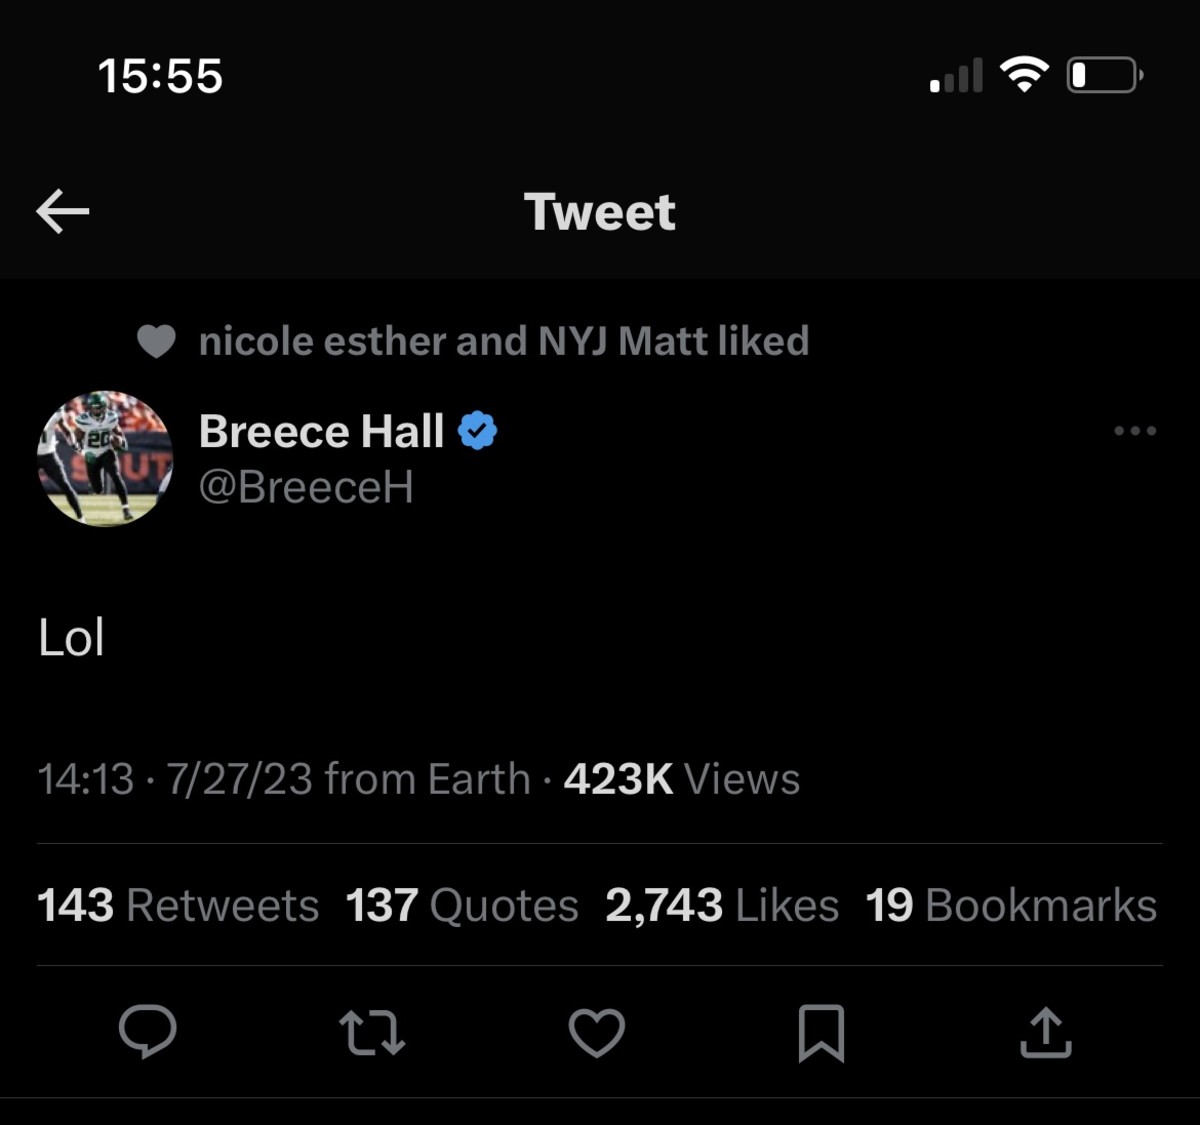 Breece Hall Tweet on July 27